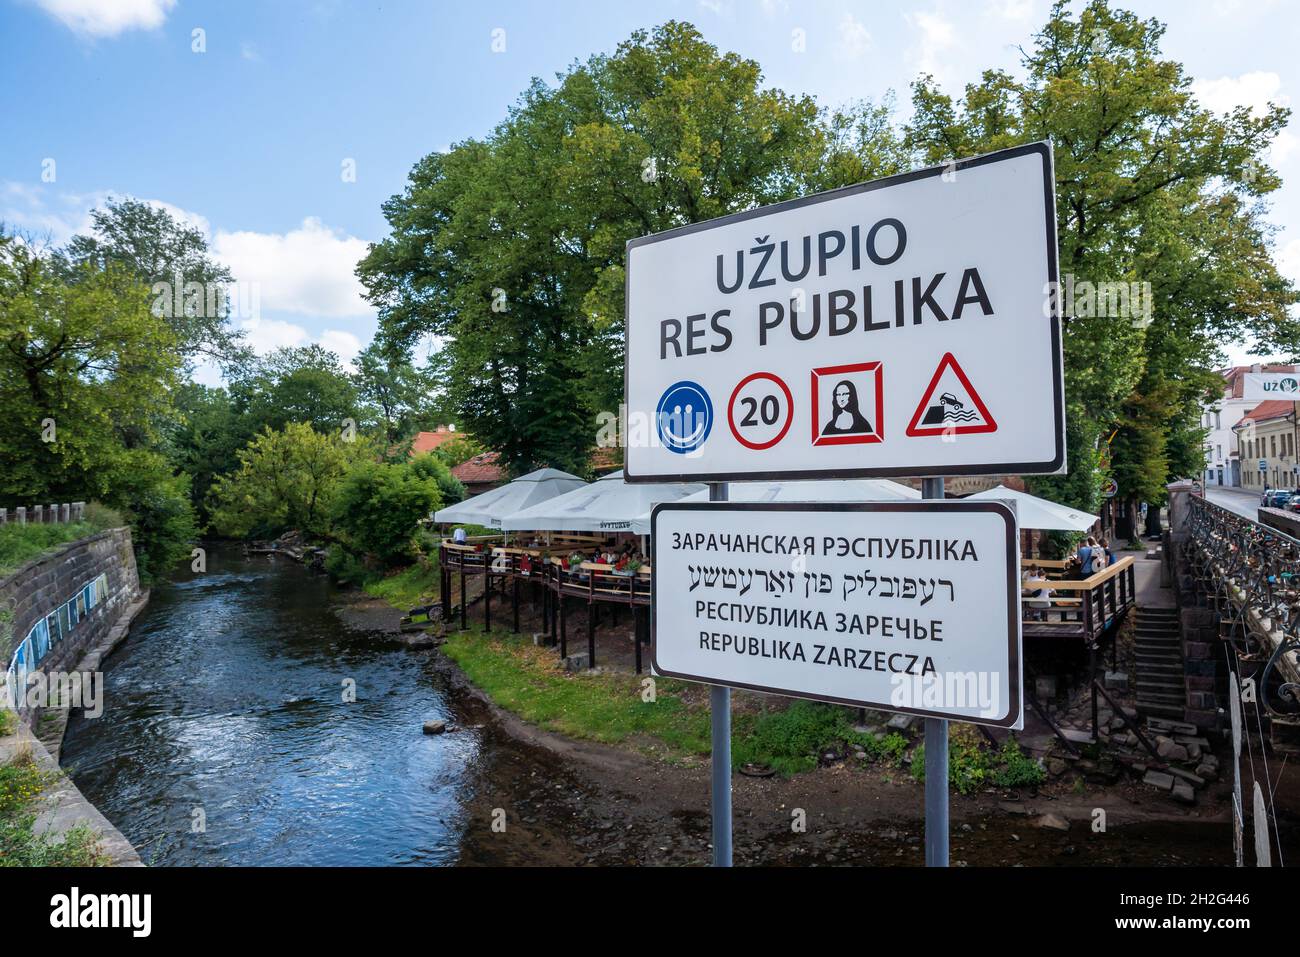 Republic of Uzupis Sign at Uzupis district - Vilnius, Lithuania Stock Photo